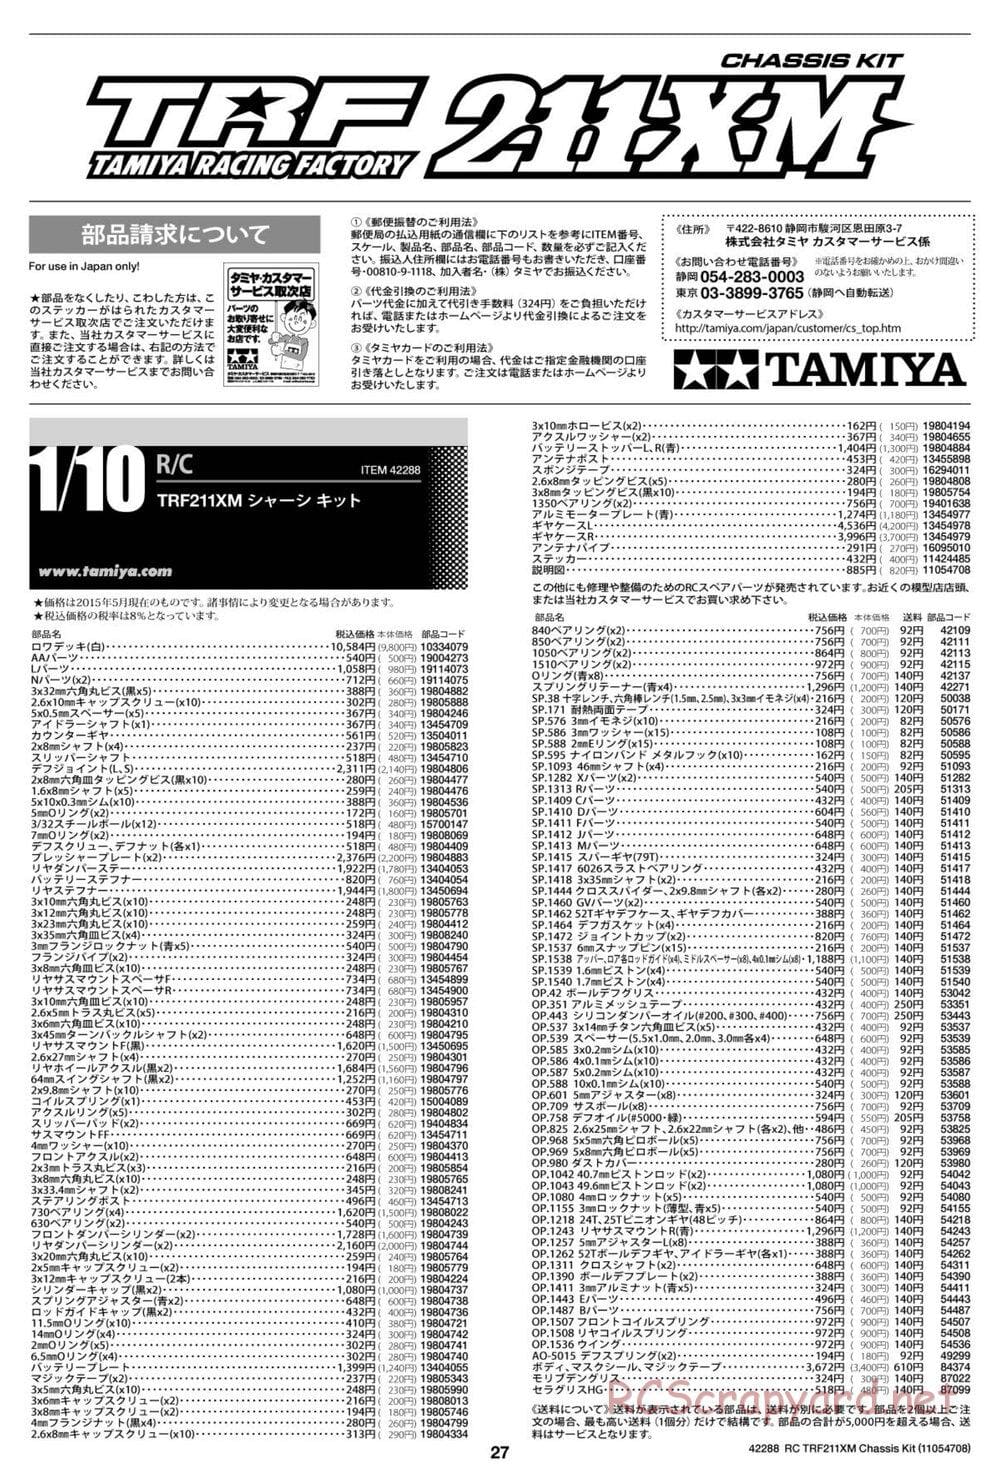 Tamiya - TRF211XM Chassis - Manual - Page 27